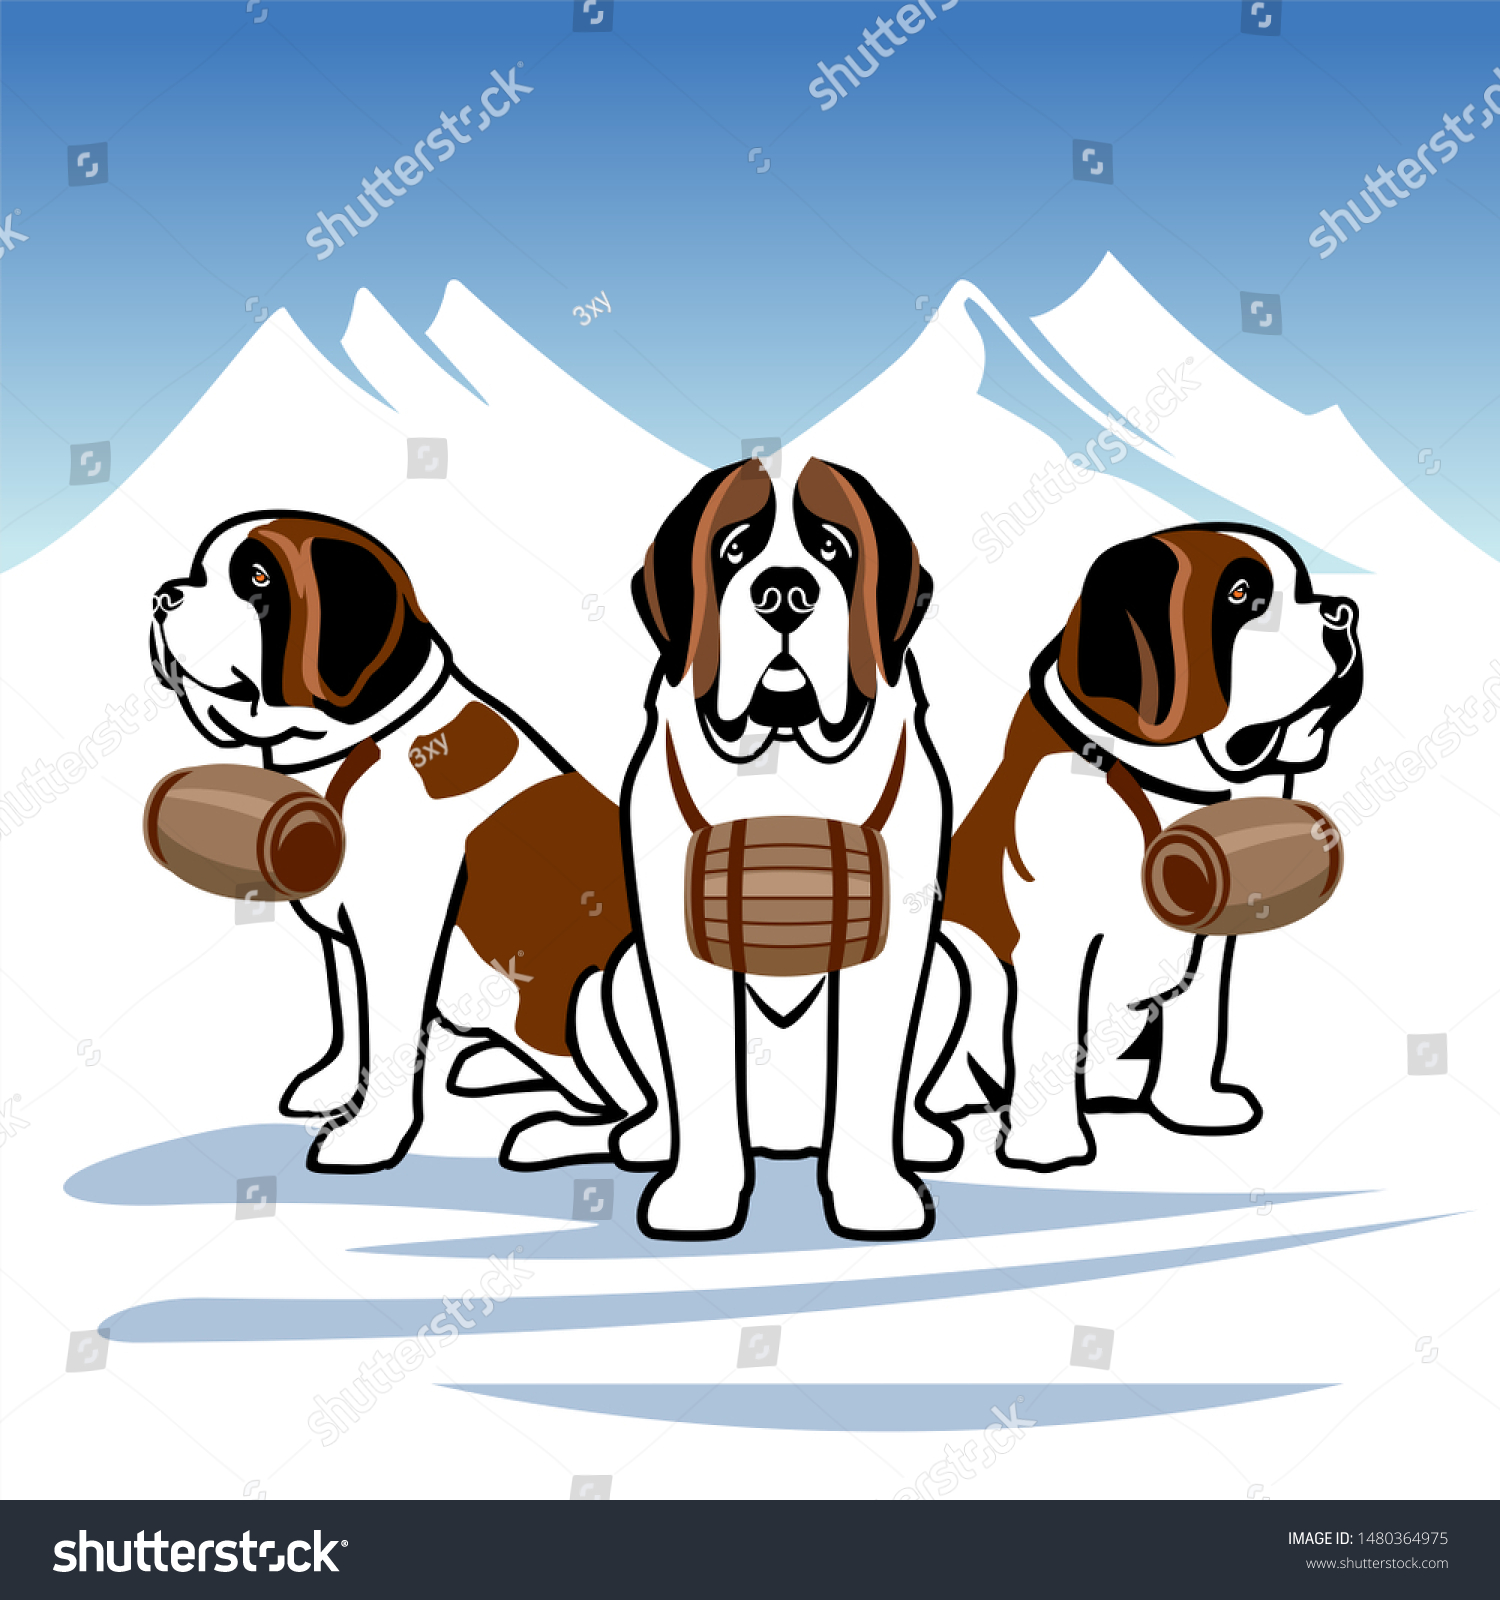 Saint Bernard Dogs Alpine Rescue Service のイラスト素材